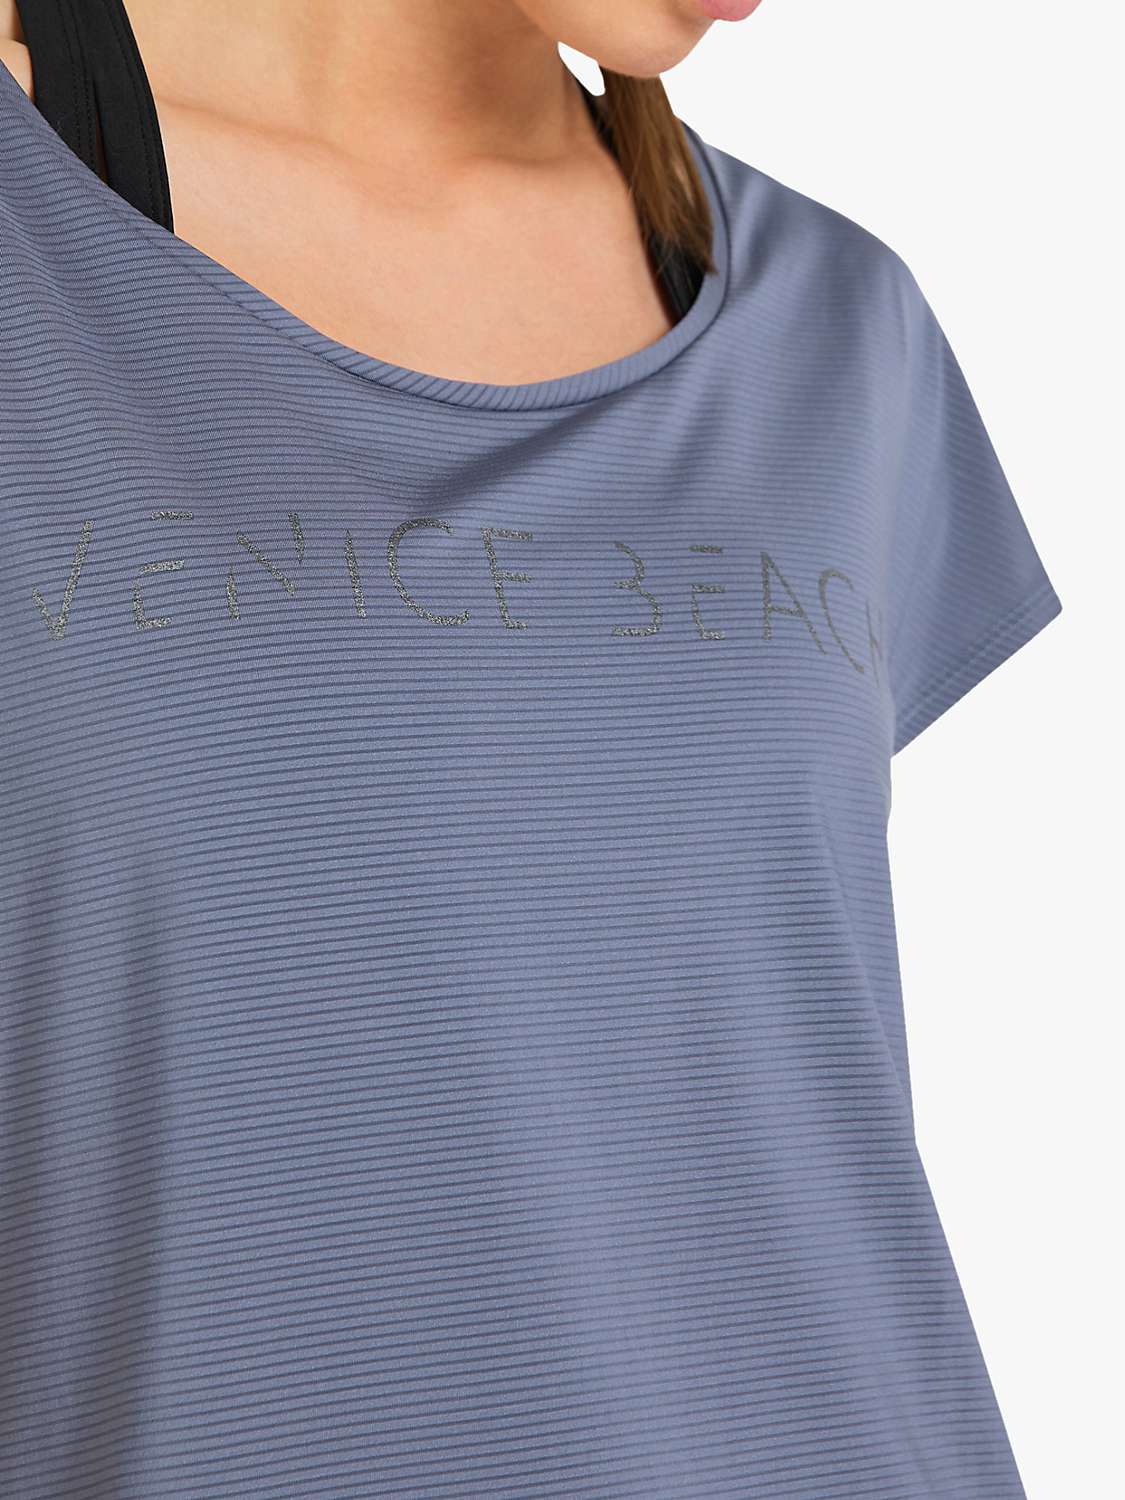 Buy Venice Beach Leyton Short Sleeve Gym Top Online at johnlewis.com